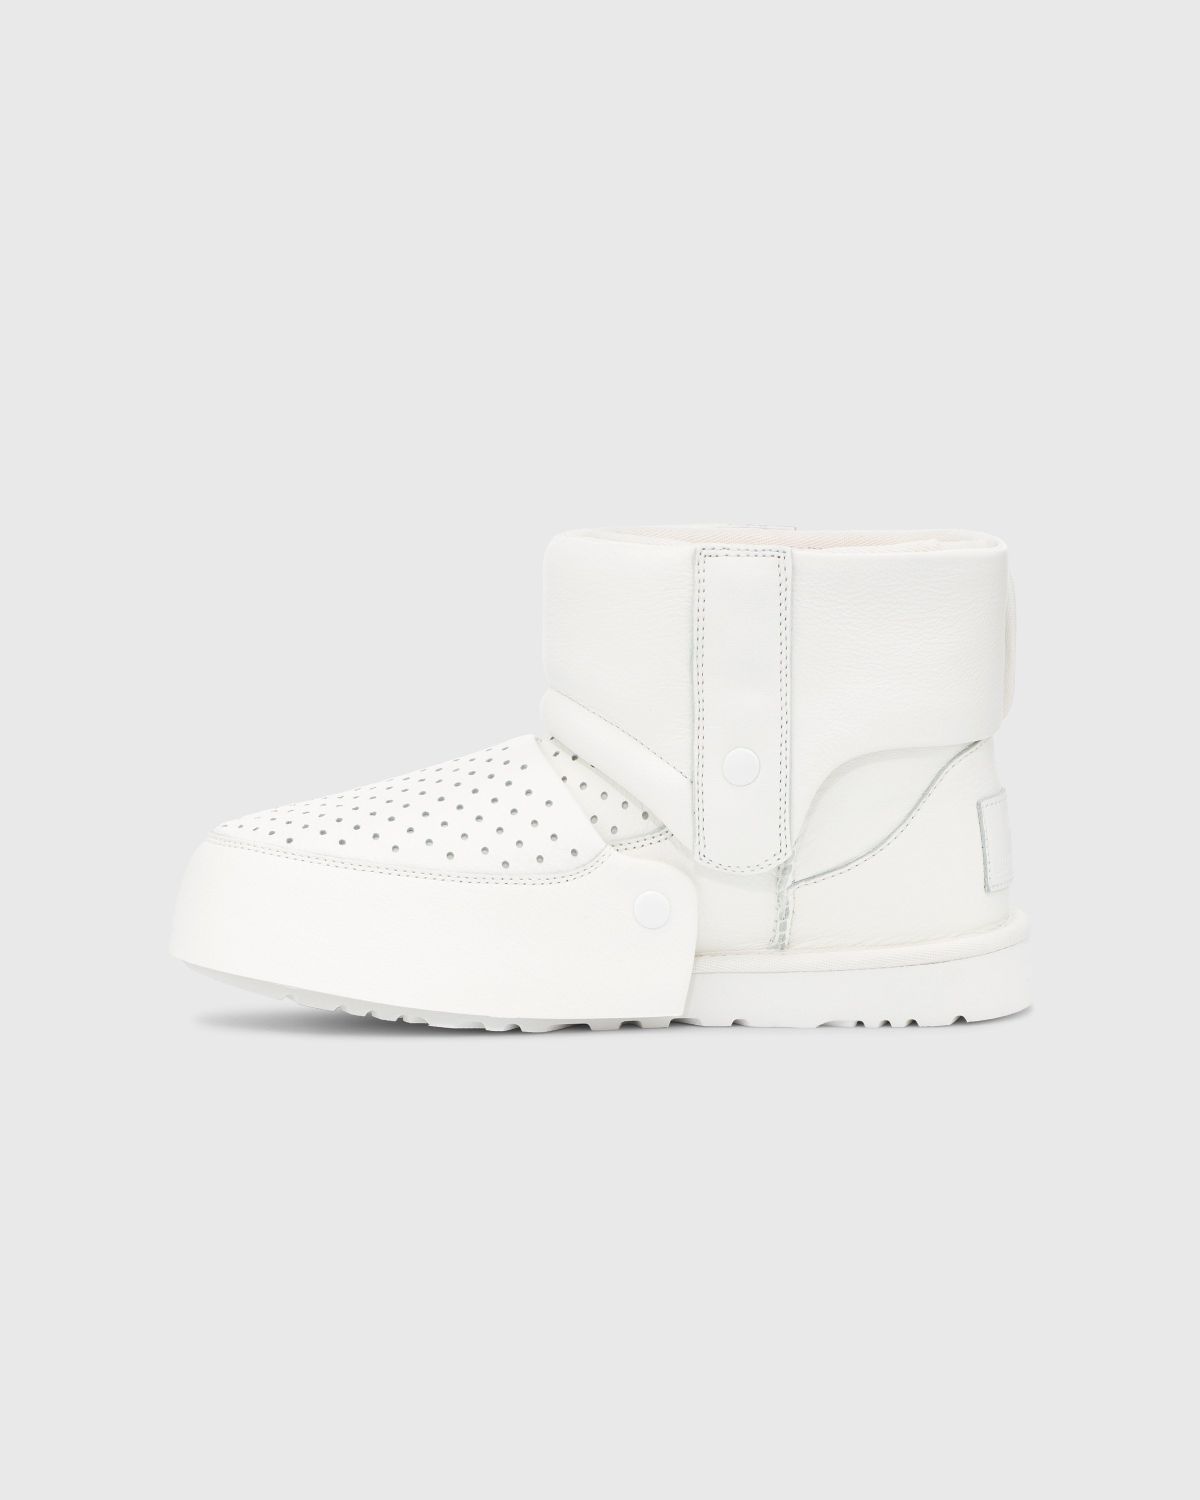 Ugg x Shayne Oliver – Mini Boot White - Lined Boots - White - Image 2